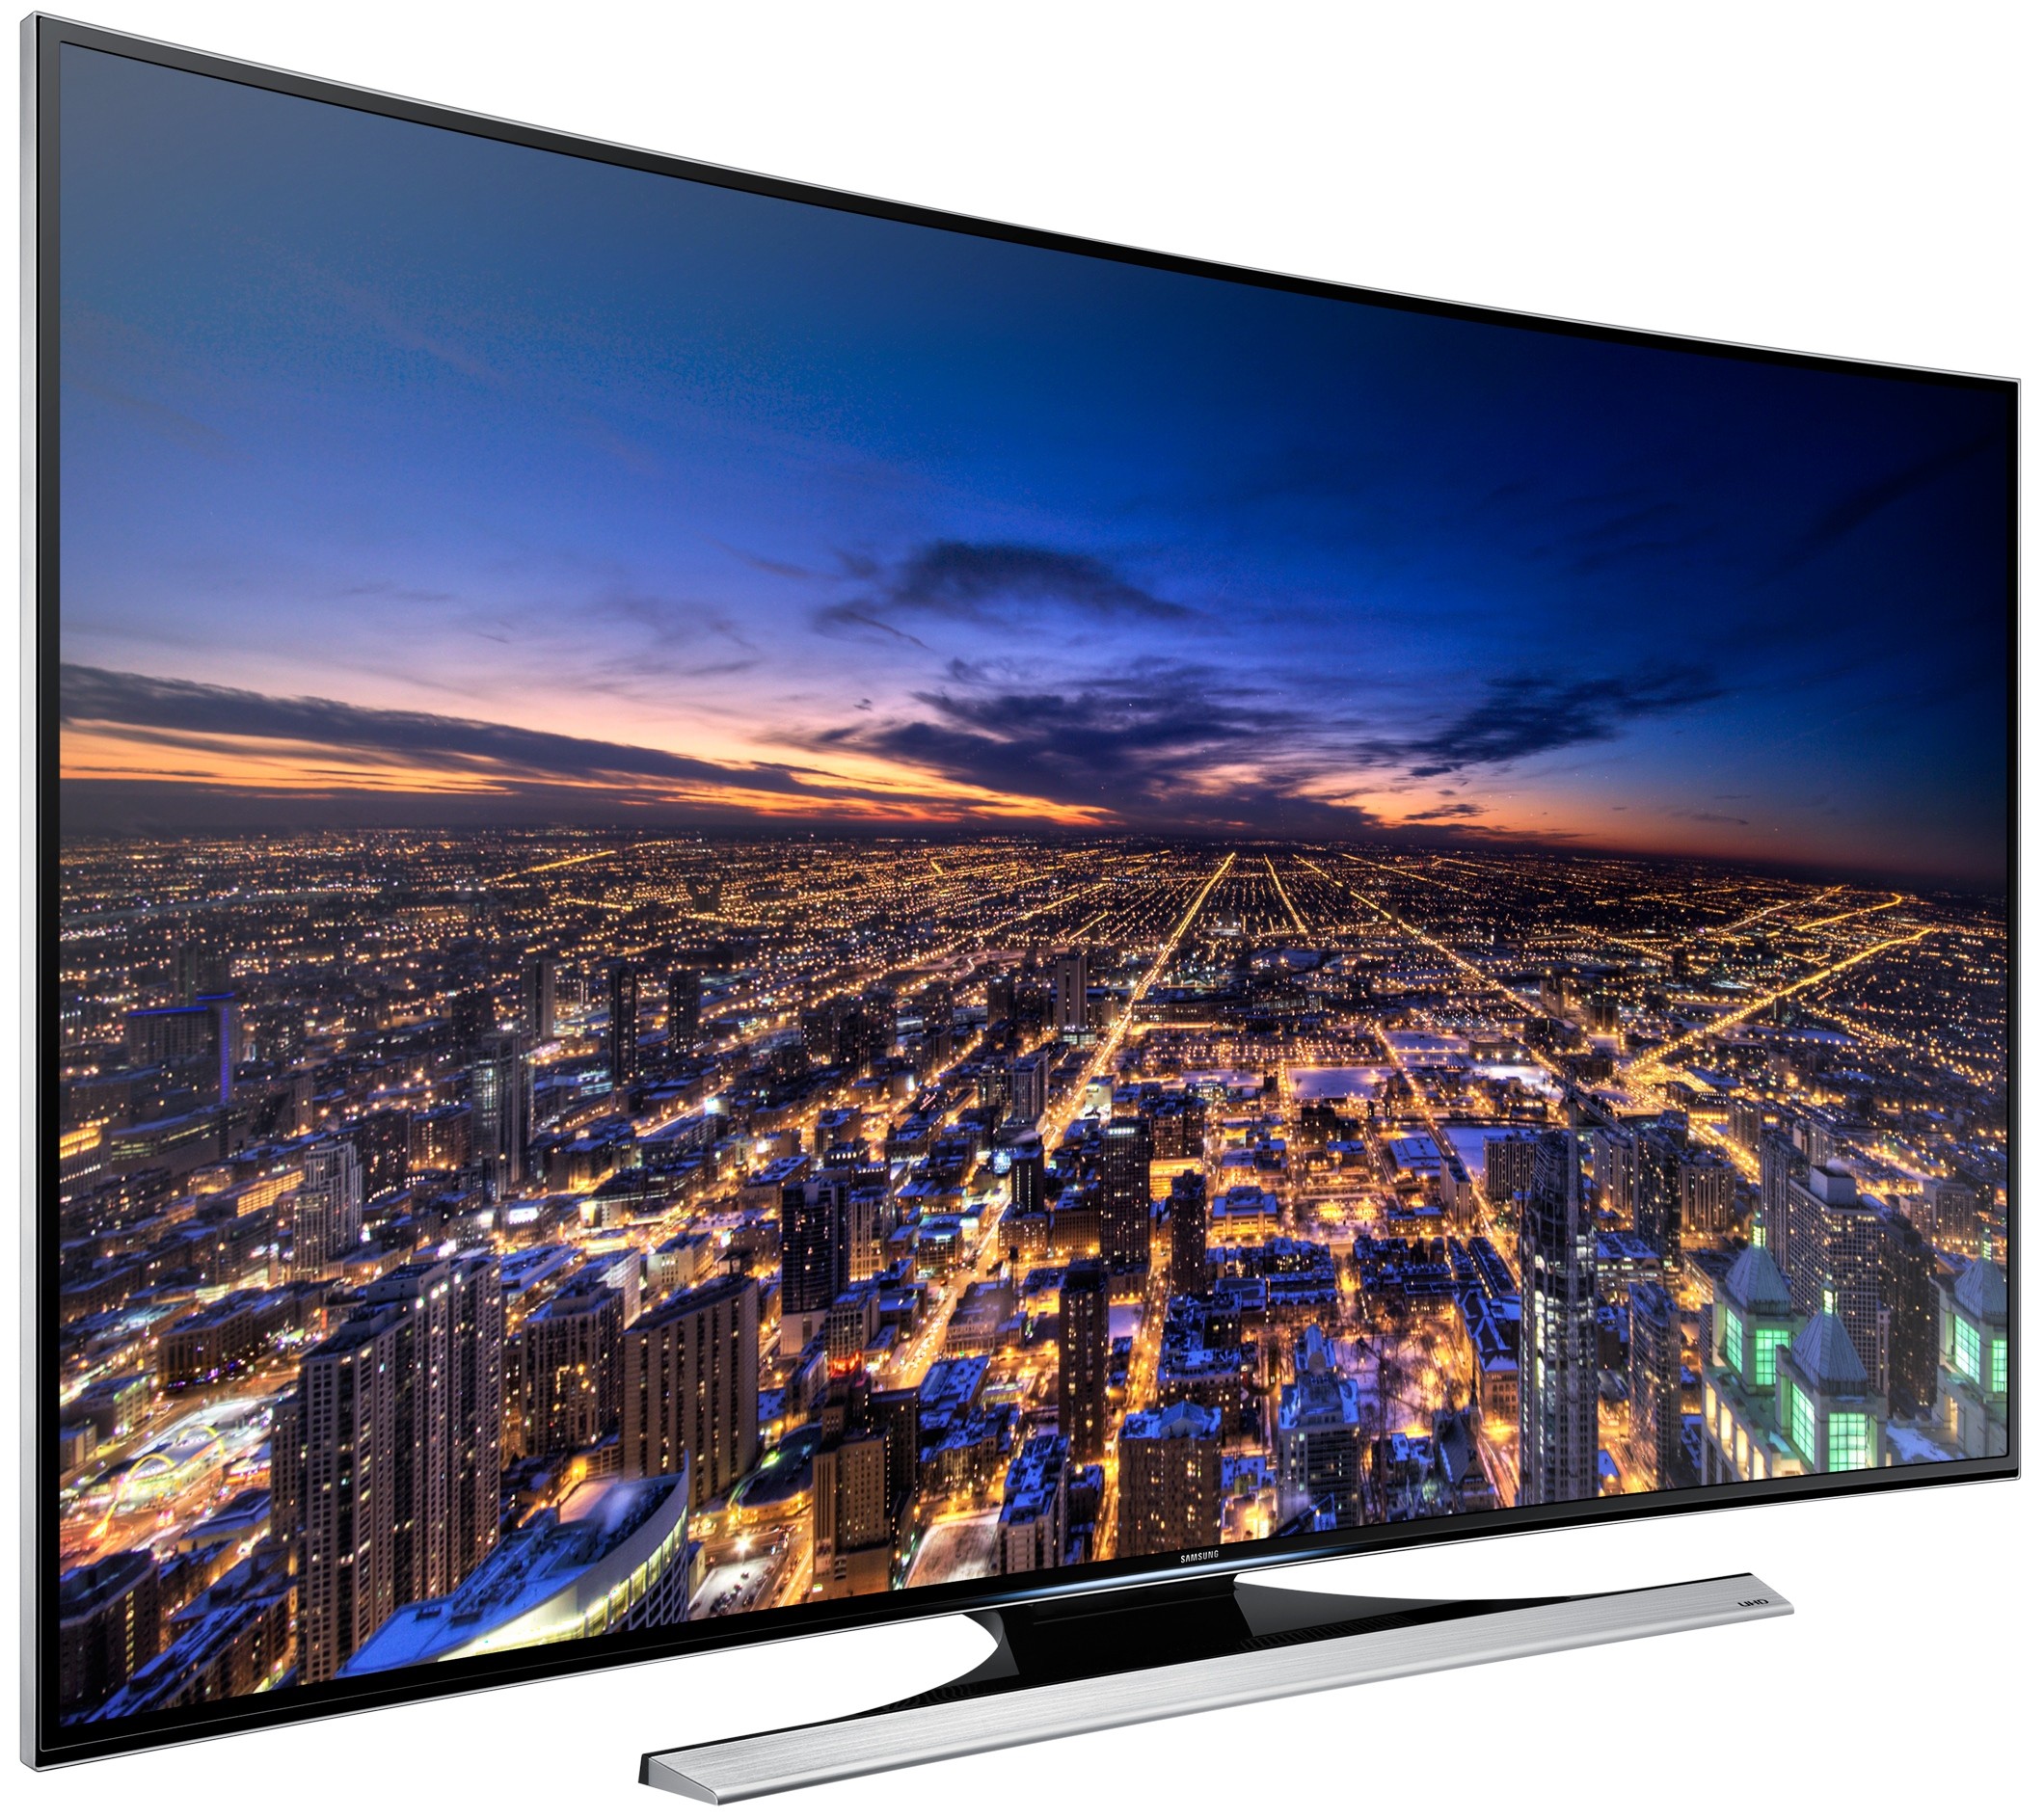 Покупка нового телевизора. Samsung ue65hu8700t. Телевизор самсунг ue55hu8700t. ТВ самсунг 55. Samsung led 55 Smart TV.